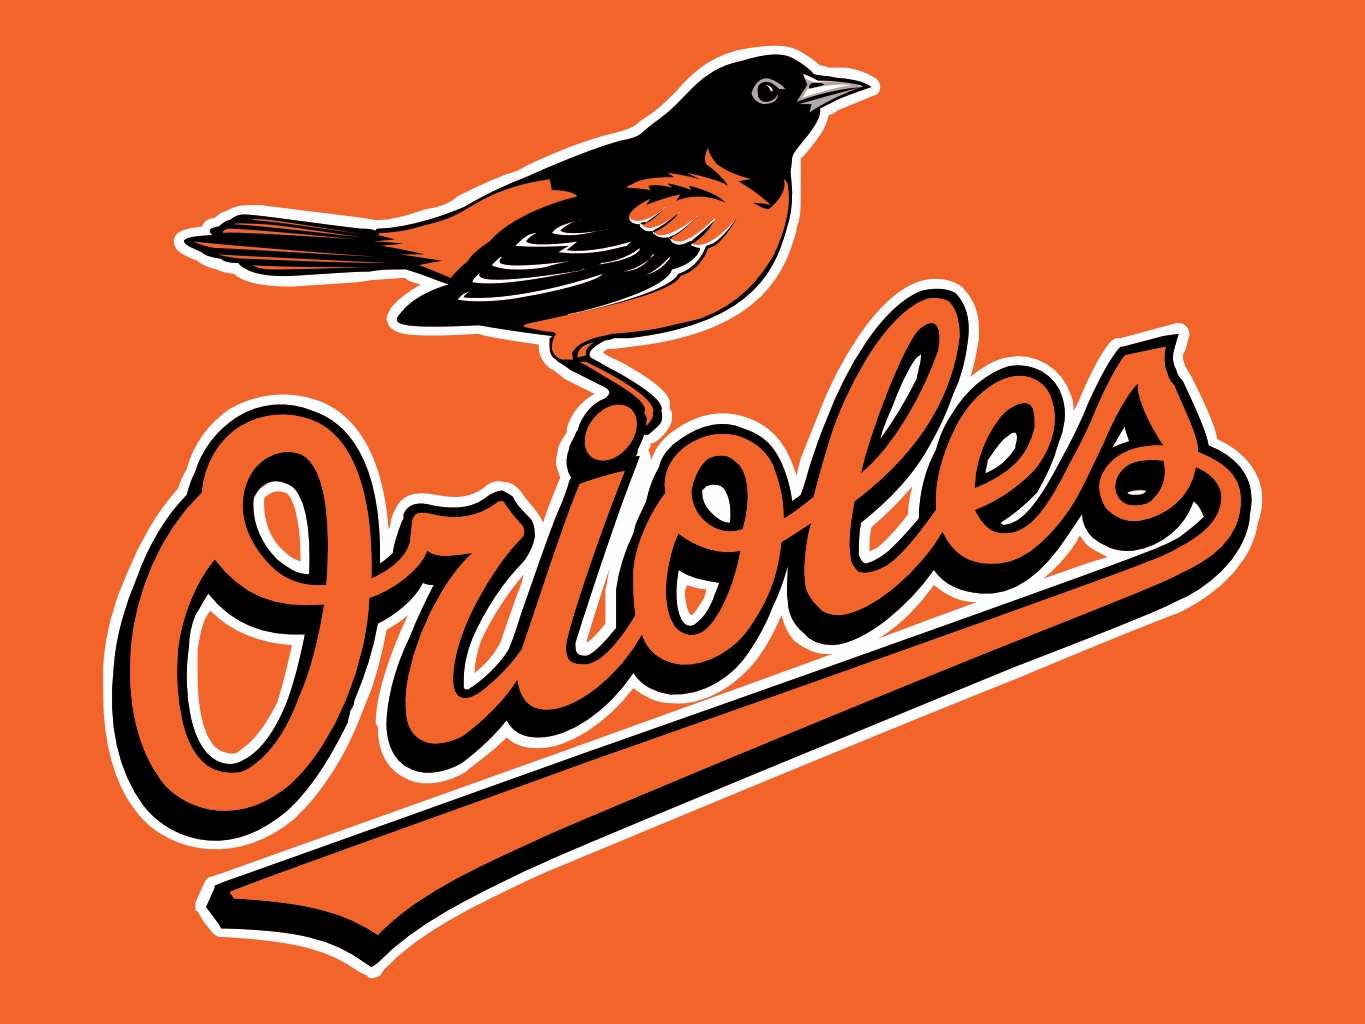 Image Baltimore Orioles.jpg Pro Sports Teams Wiki